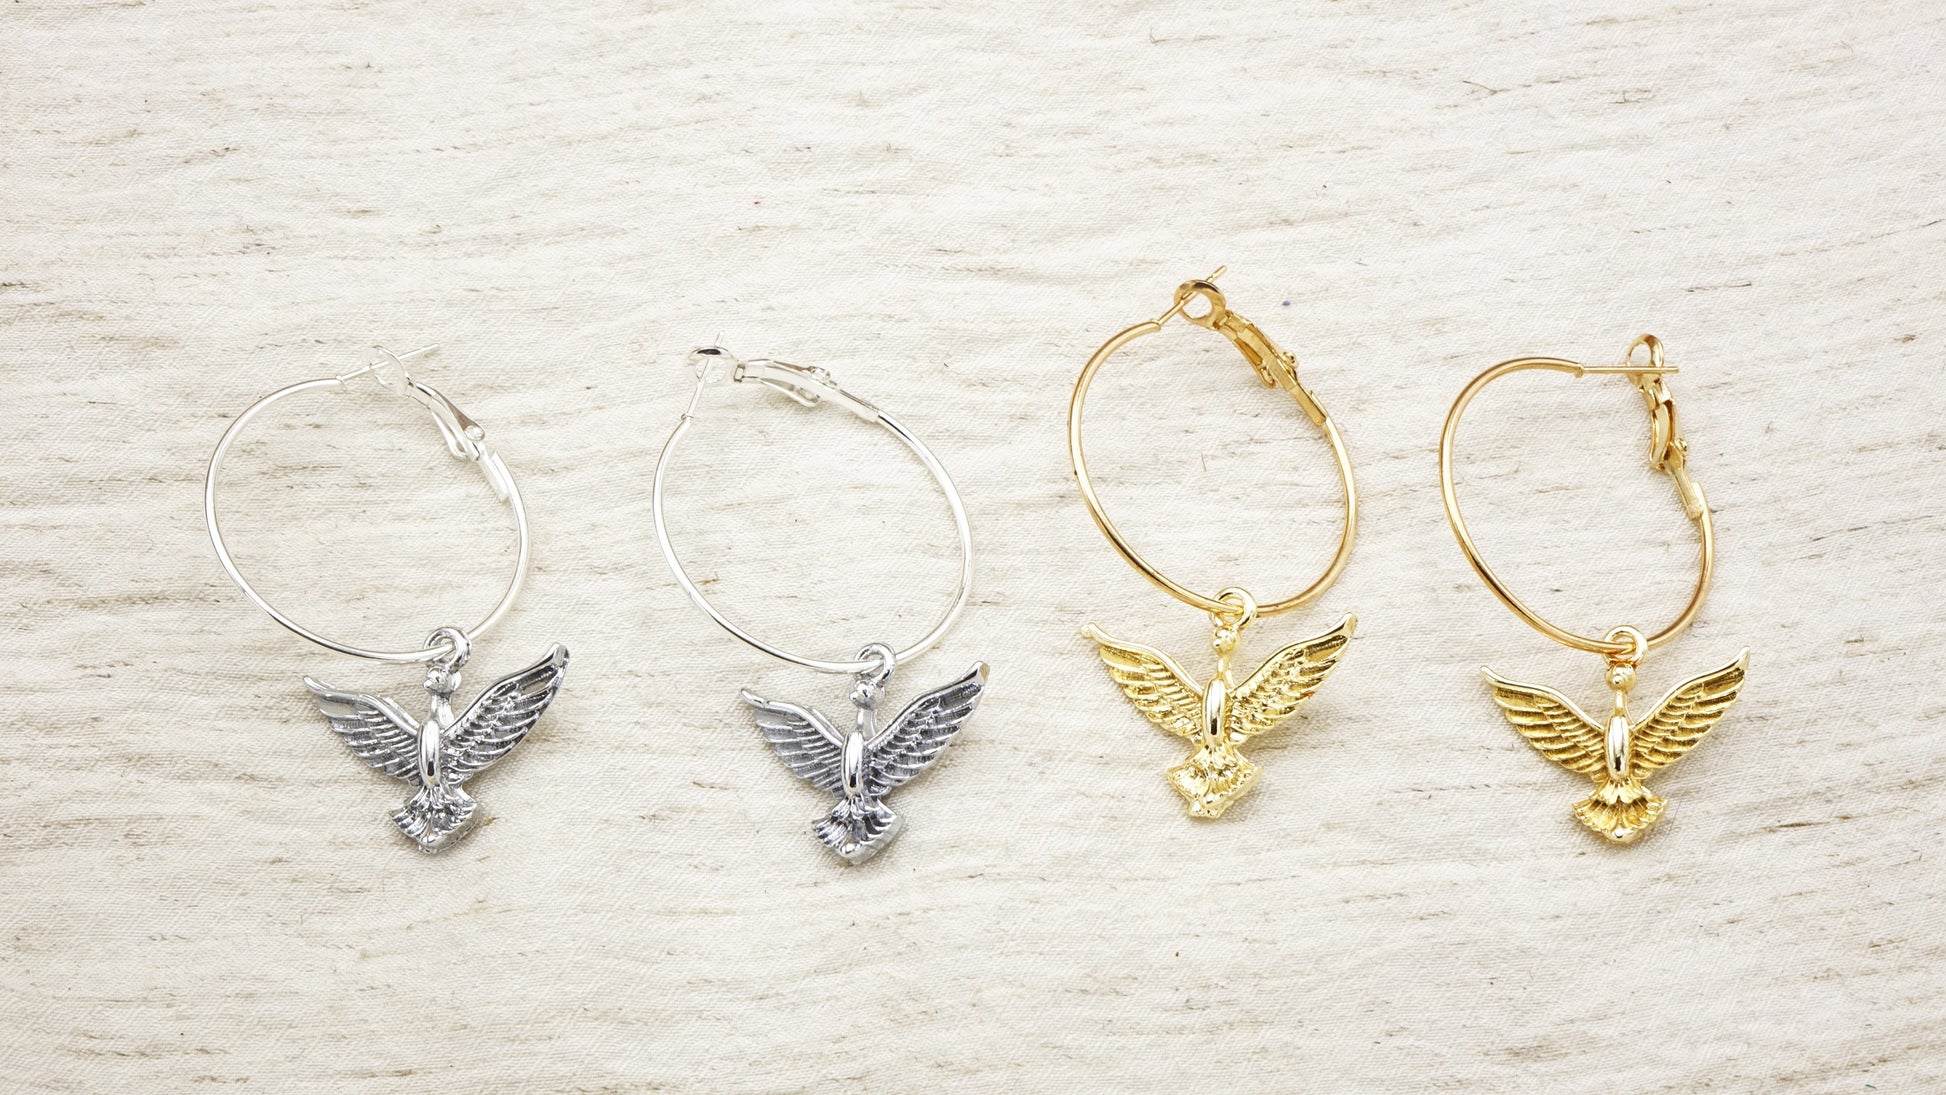 Phoenix New Beginnings Necklace & Earrings - Verna Artisan Works